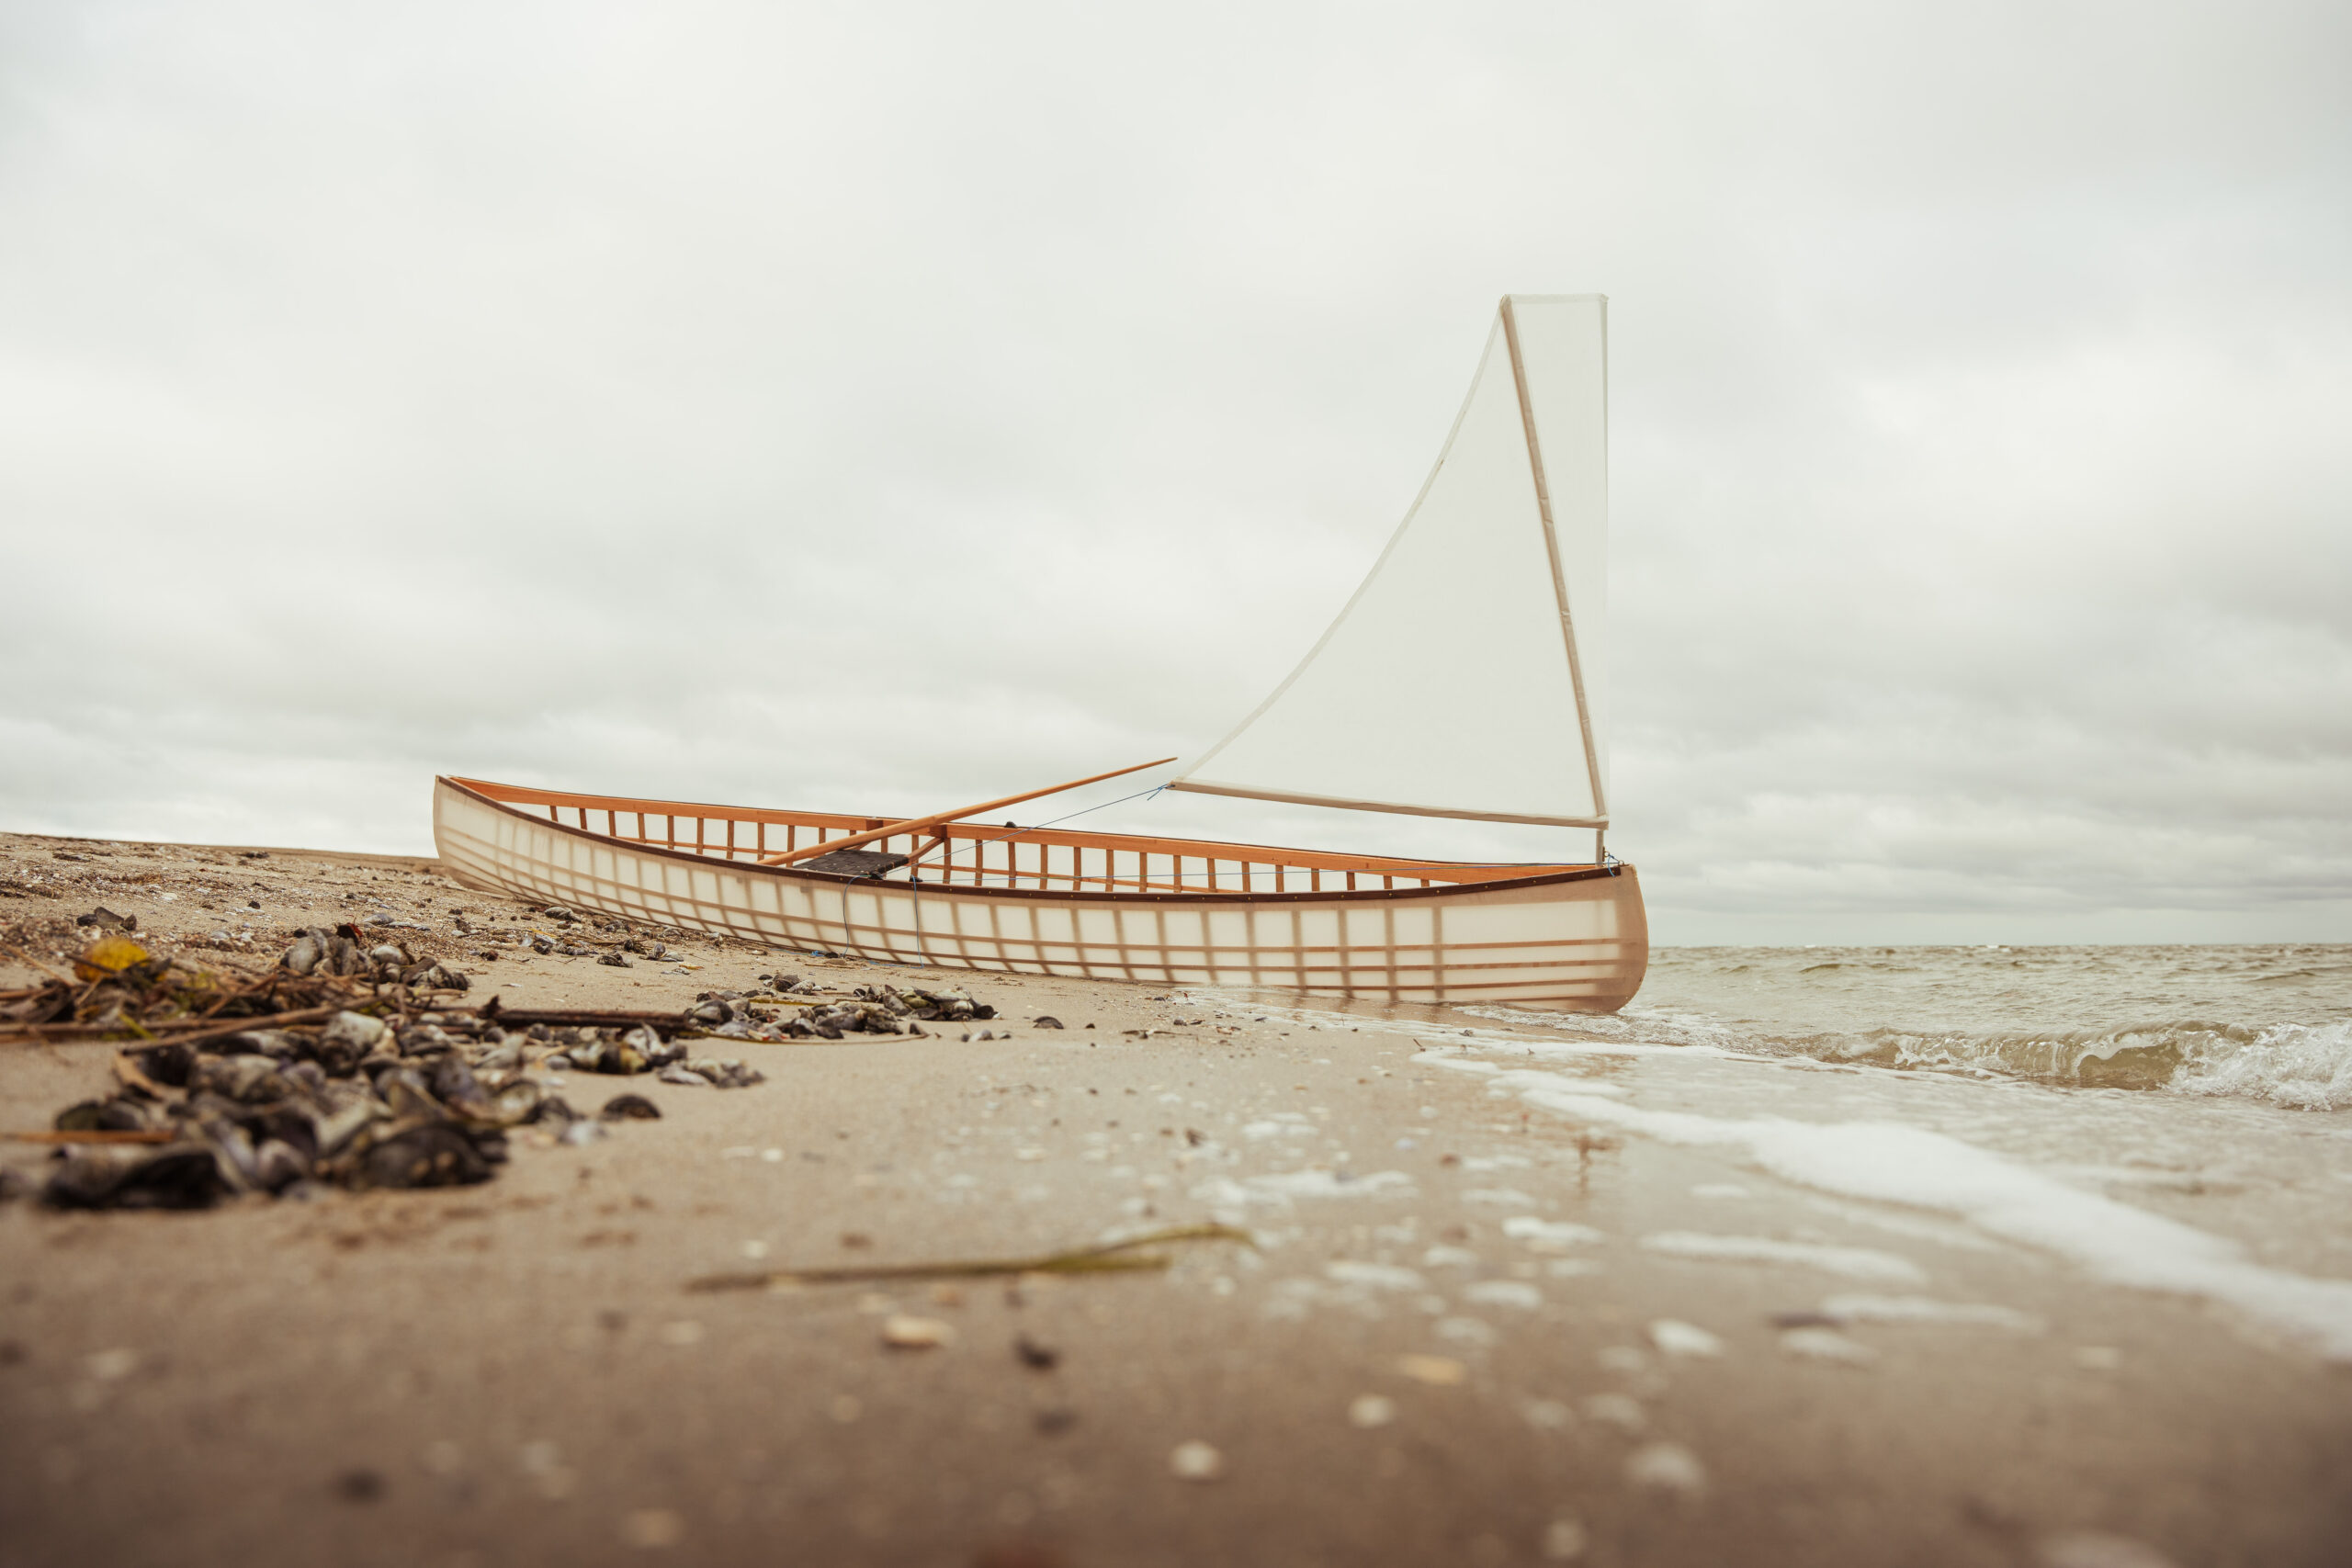 Skin-on-frame Kanu mit Segel am Strand